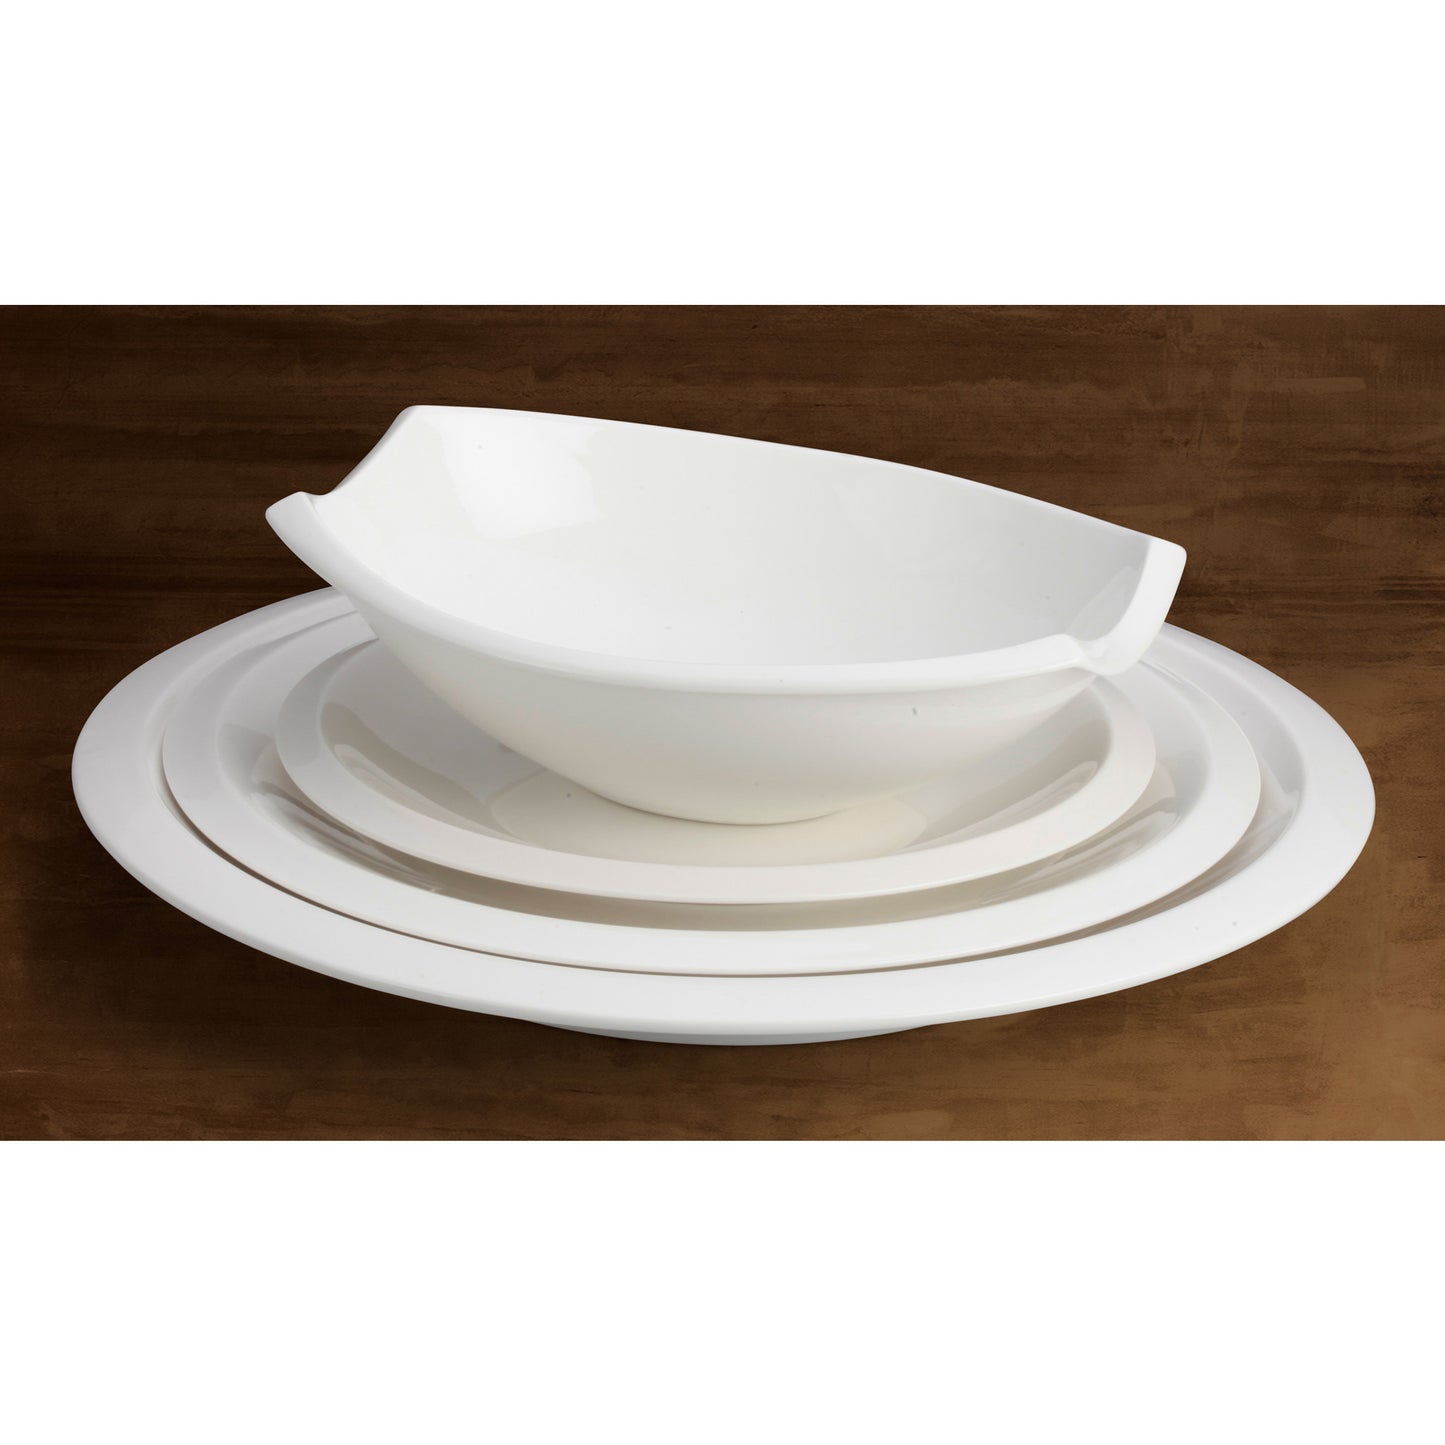 WDP006-206 - 13" Porcelain Oval Bowl, Creamy White, 12 pcs/case